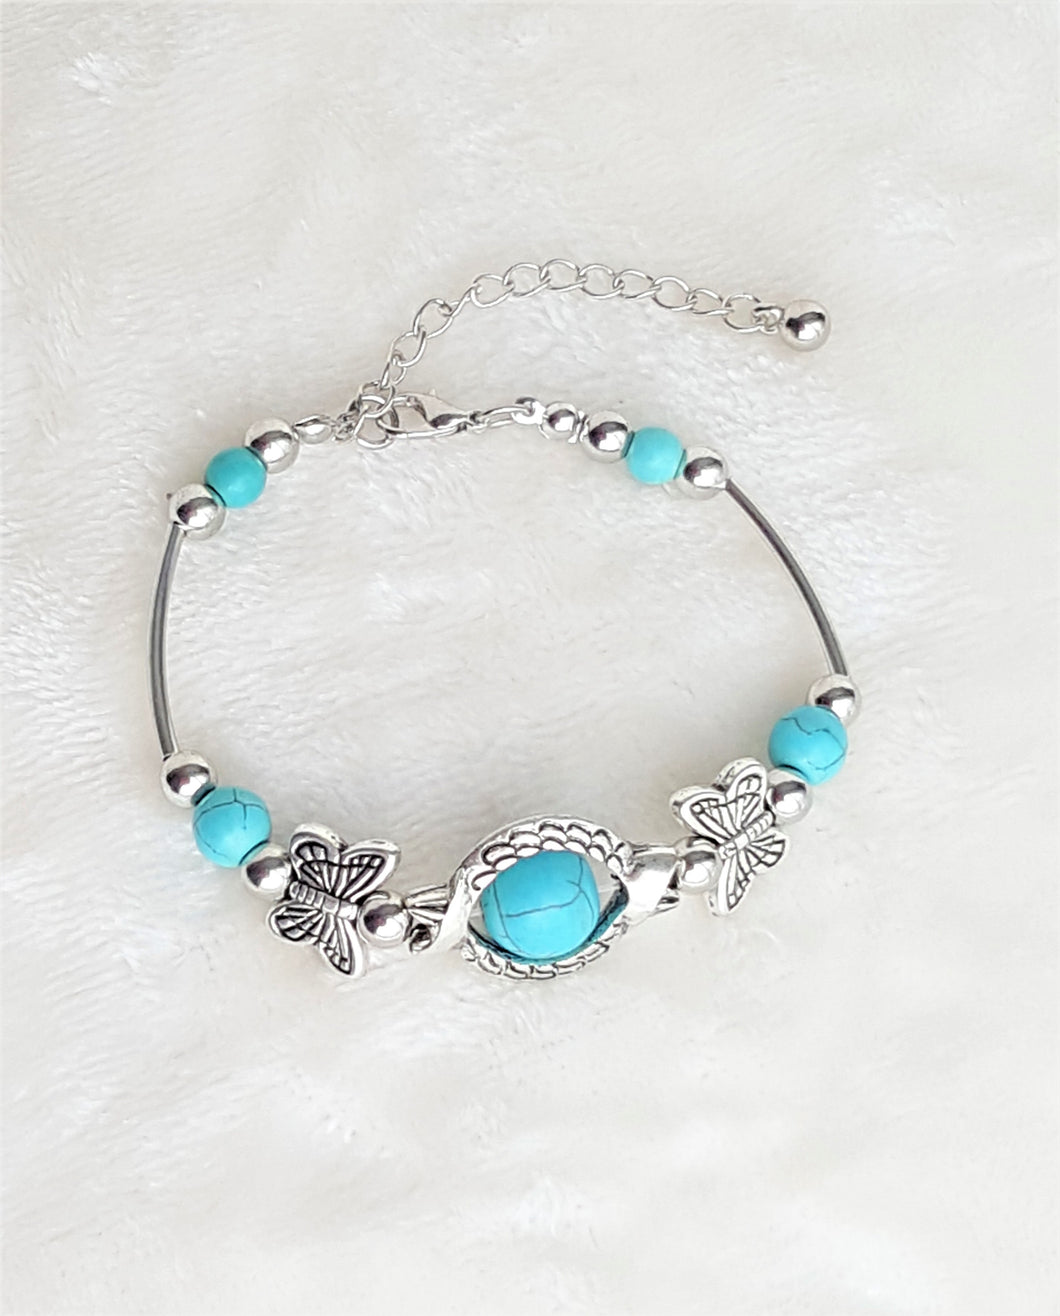 Alloy & Blue Stone Bracelet Butterfly Beads Bohemian Handmade Bracelet, Tibetan Silver Color Bracelet with Turquoise Beads - Urban Flair USA